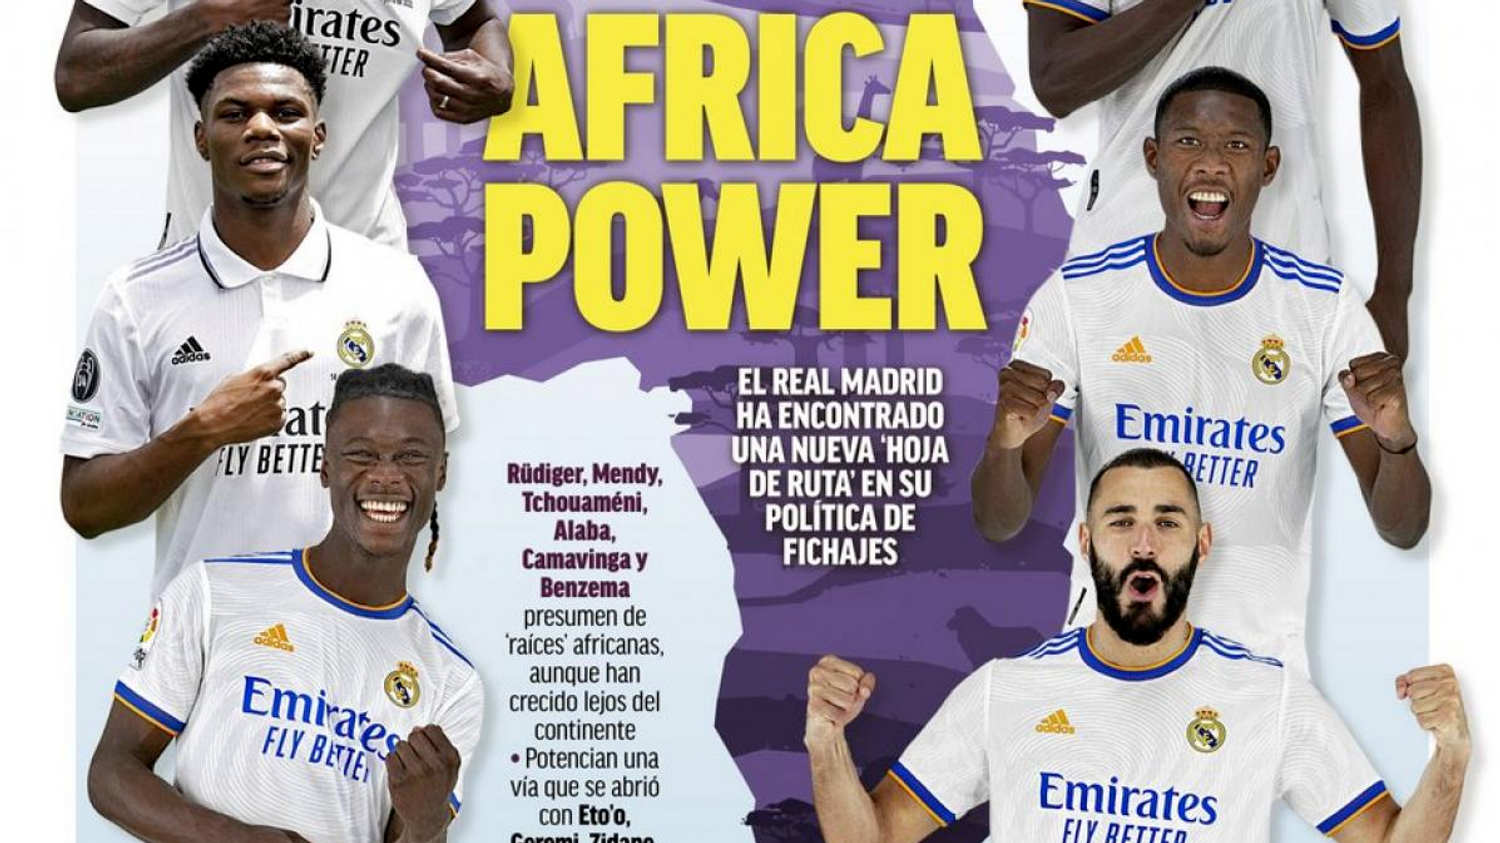 Une "Africa Power" de Marca en hommage au Real Madrid